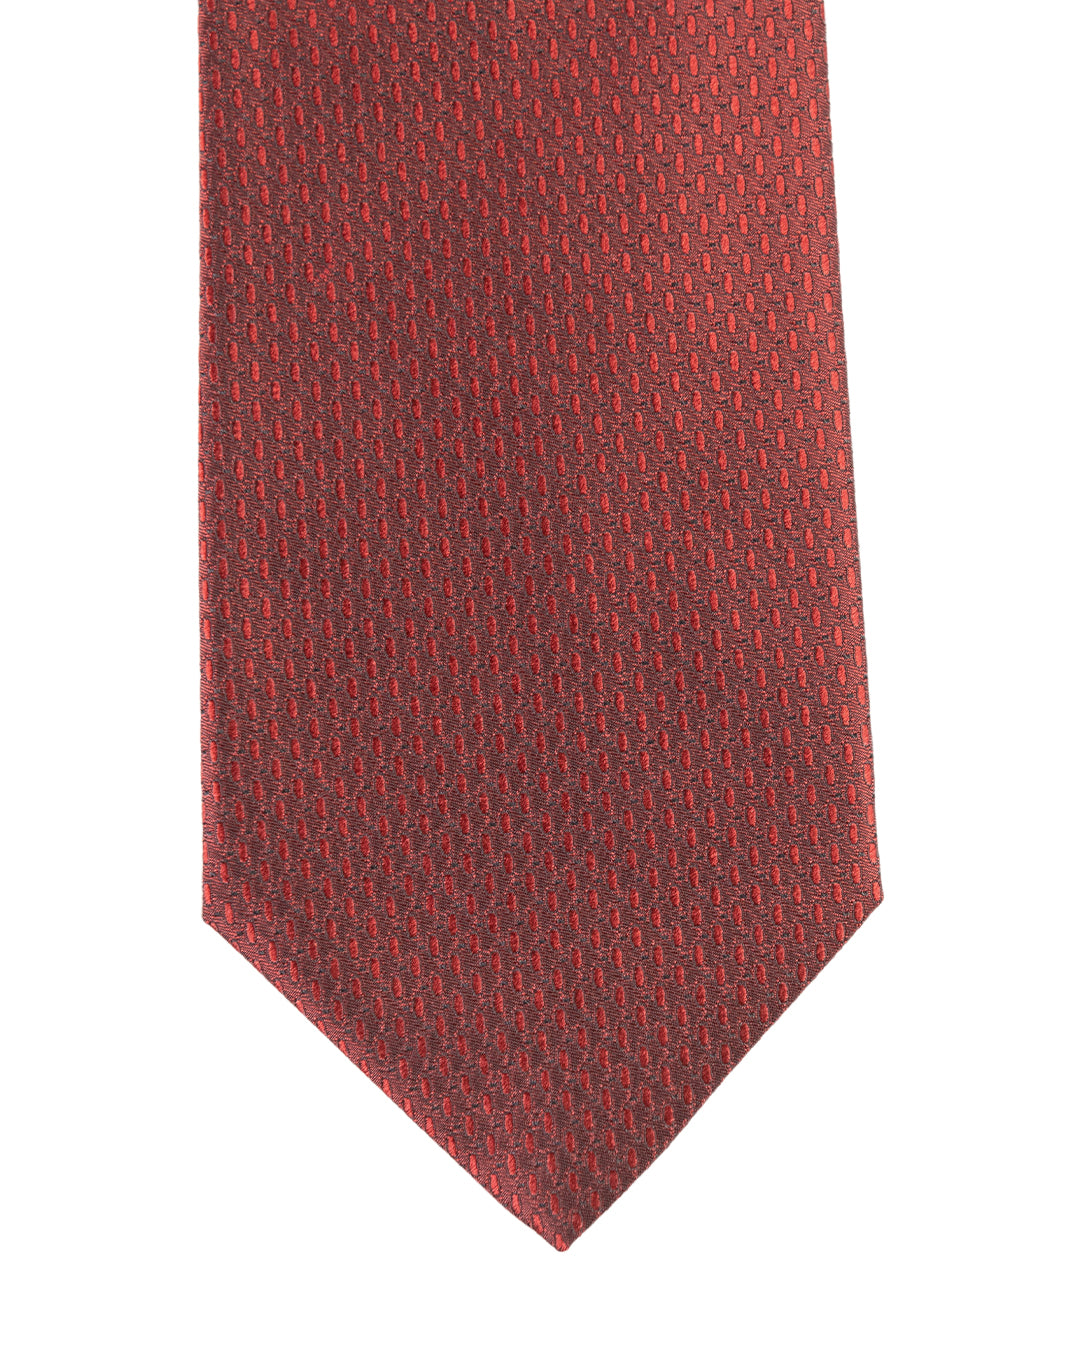 Red Tie Textured